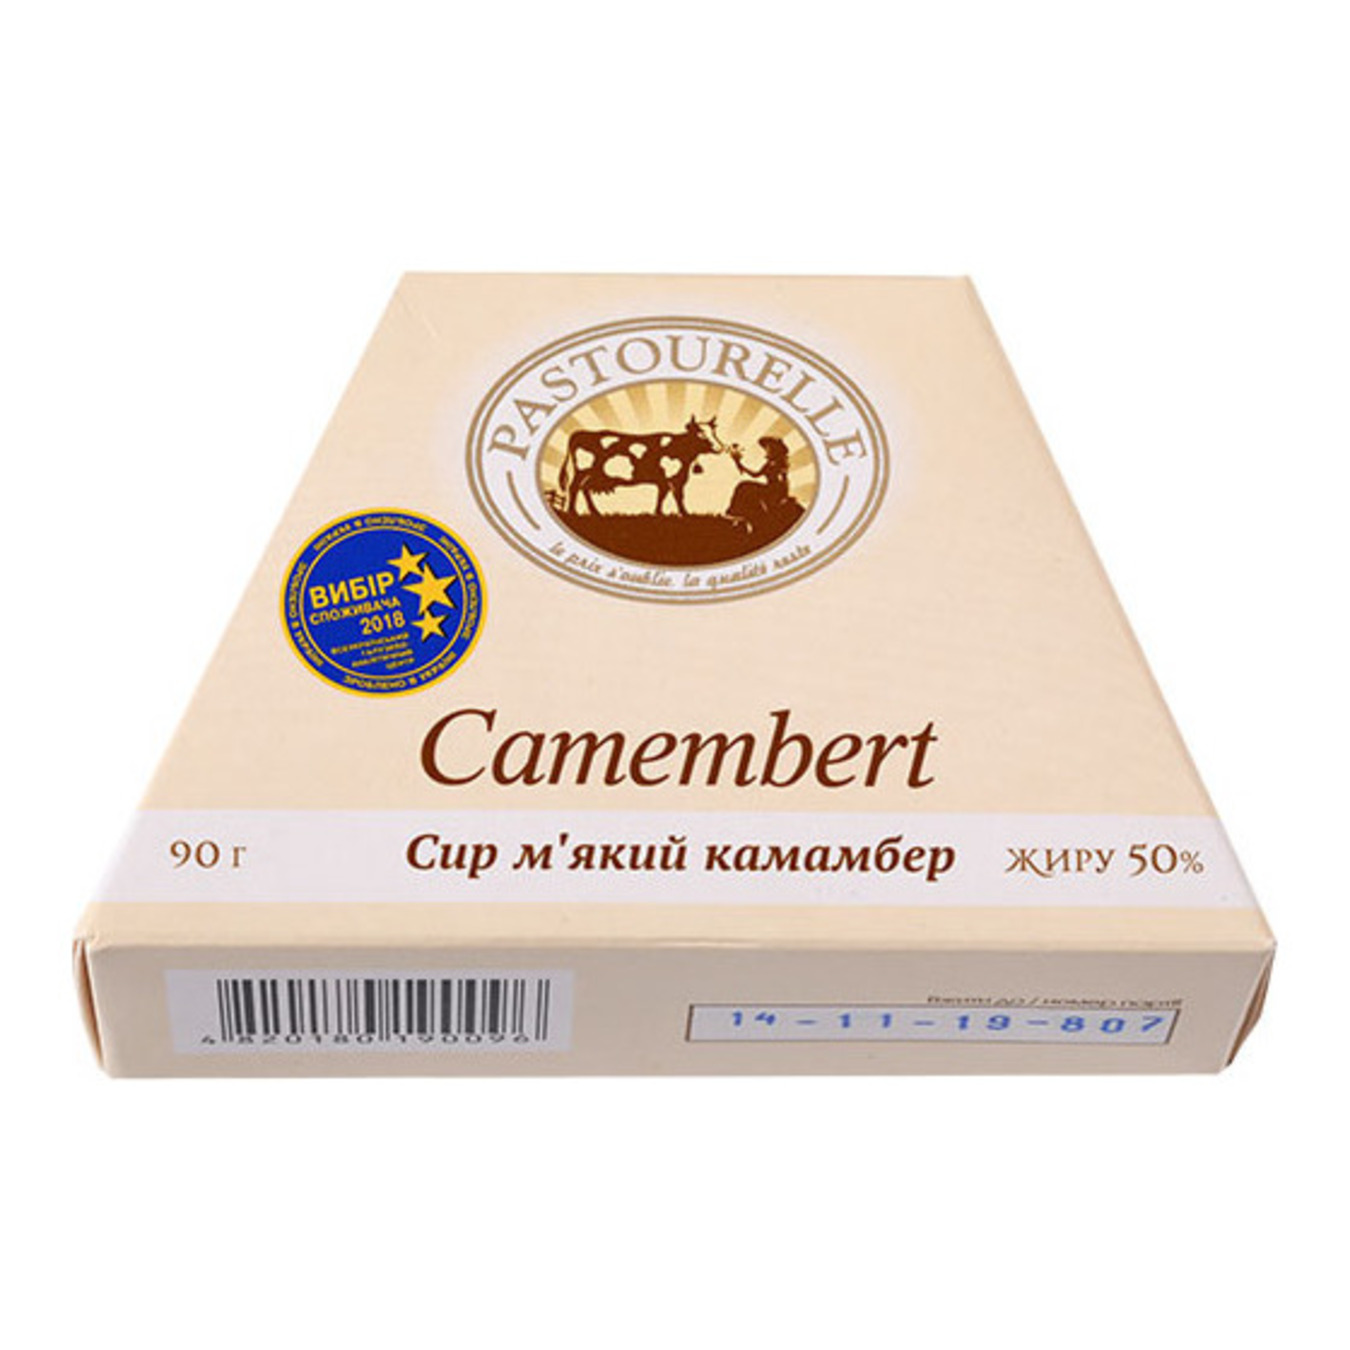 Pastourelle Camembert soft cheese 50% 90g